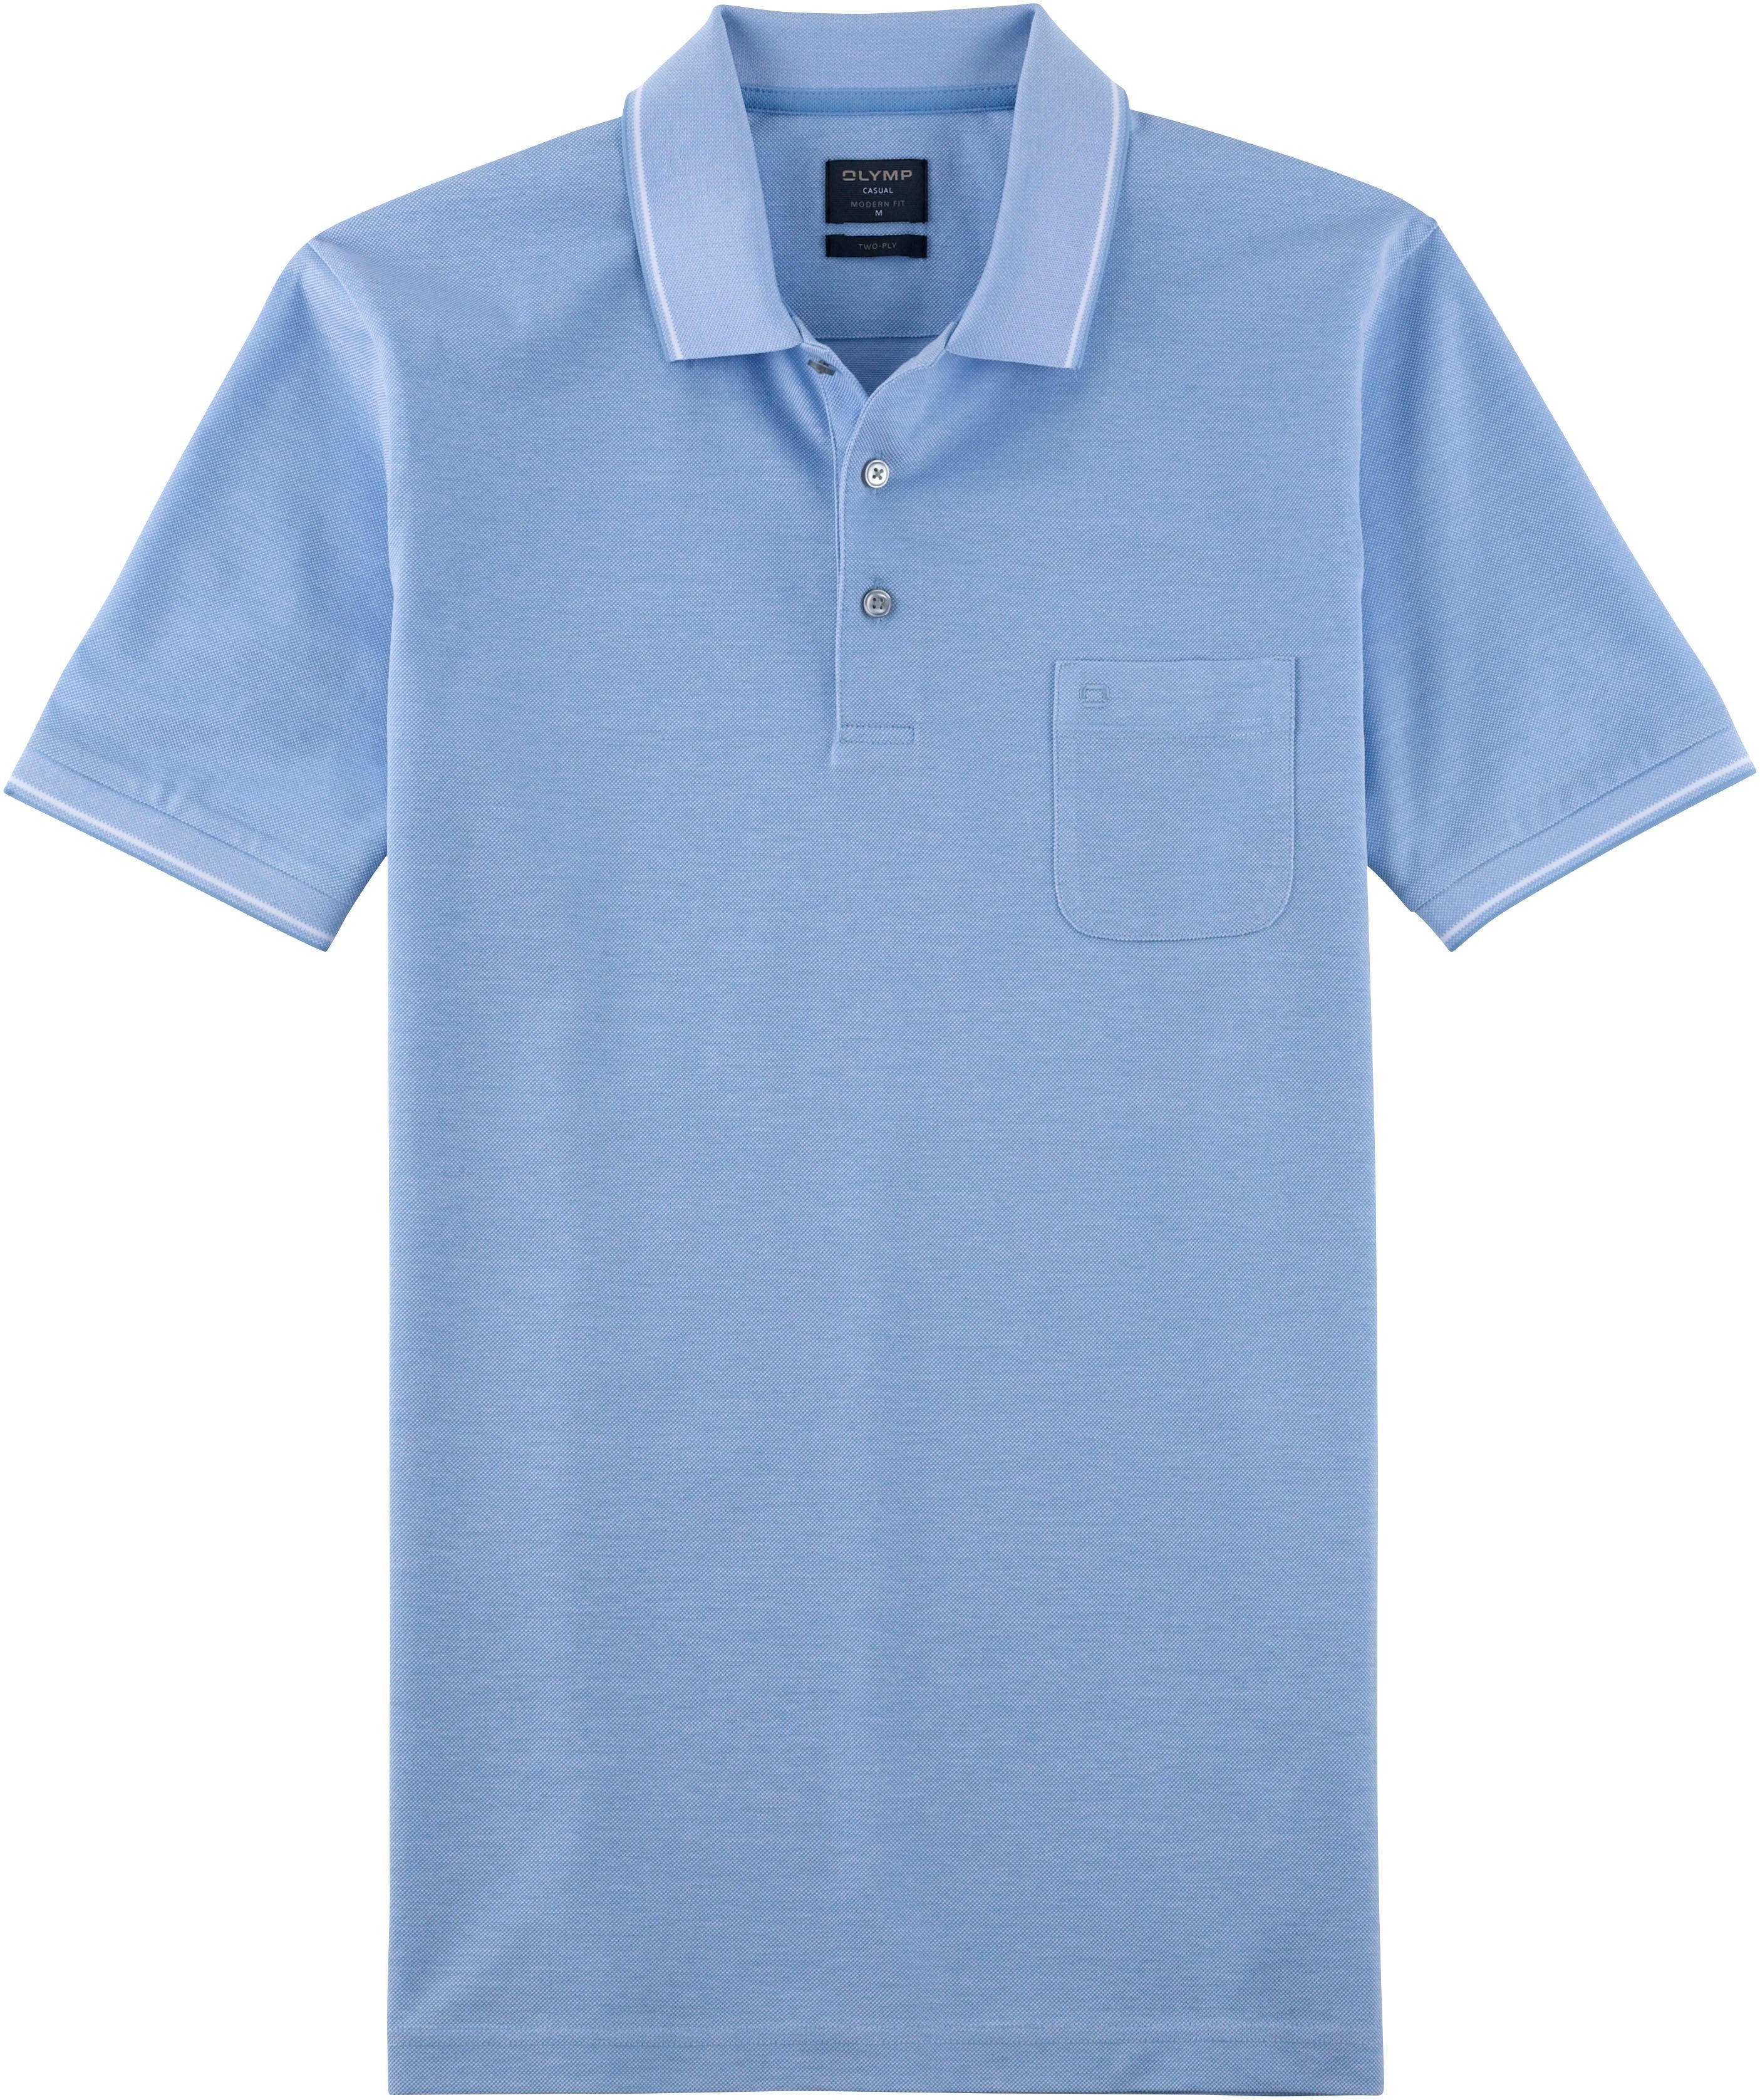 OLYMP Poloshirt Luxor modern fit in hochwertiger Piqué-Qualität hellblau